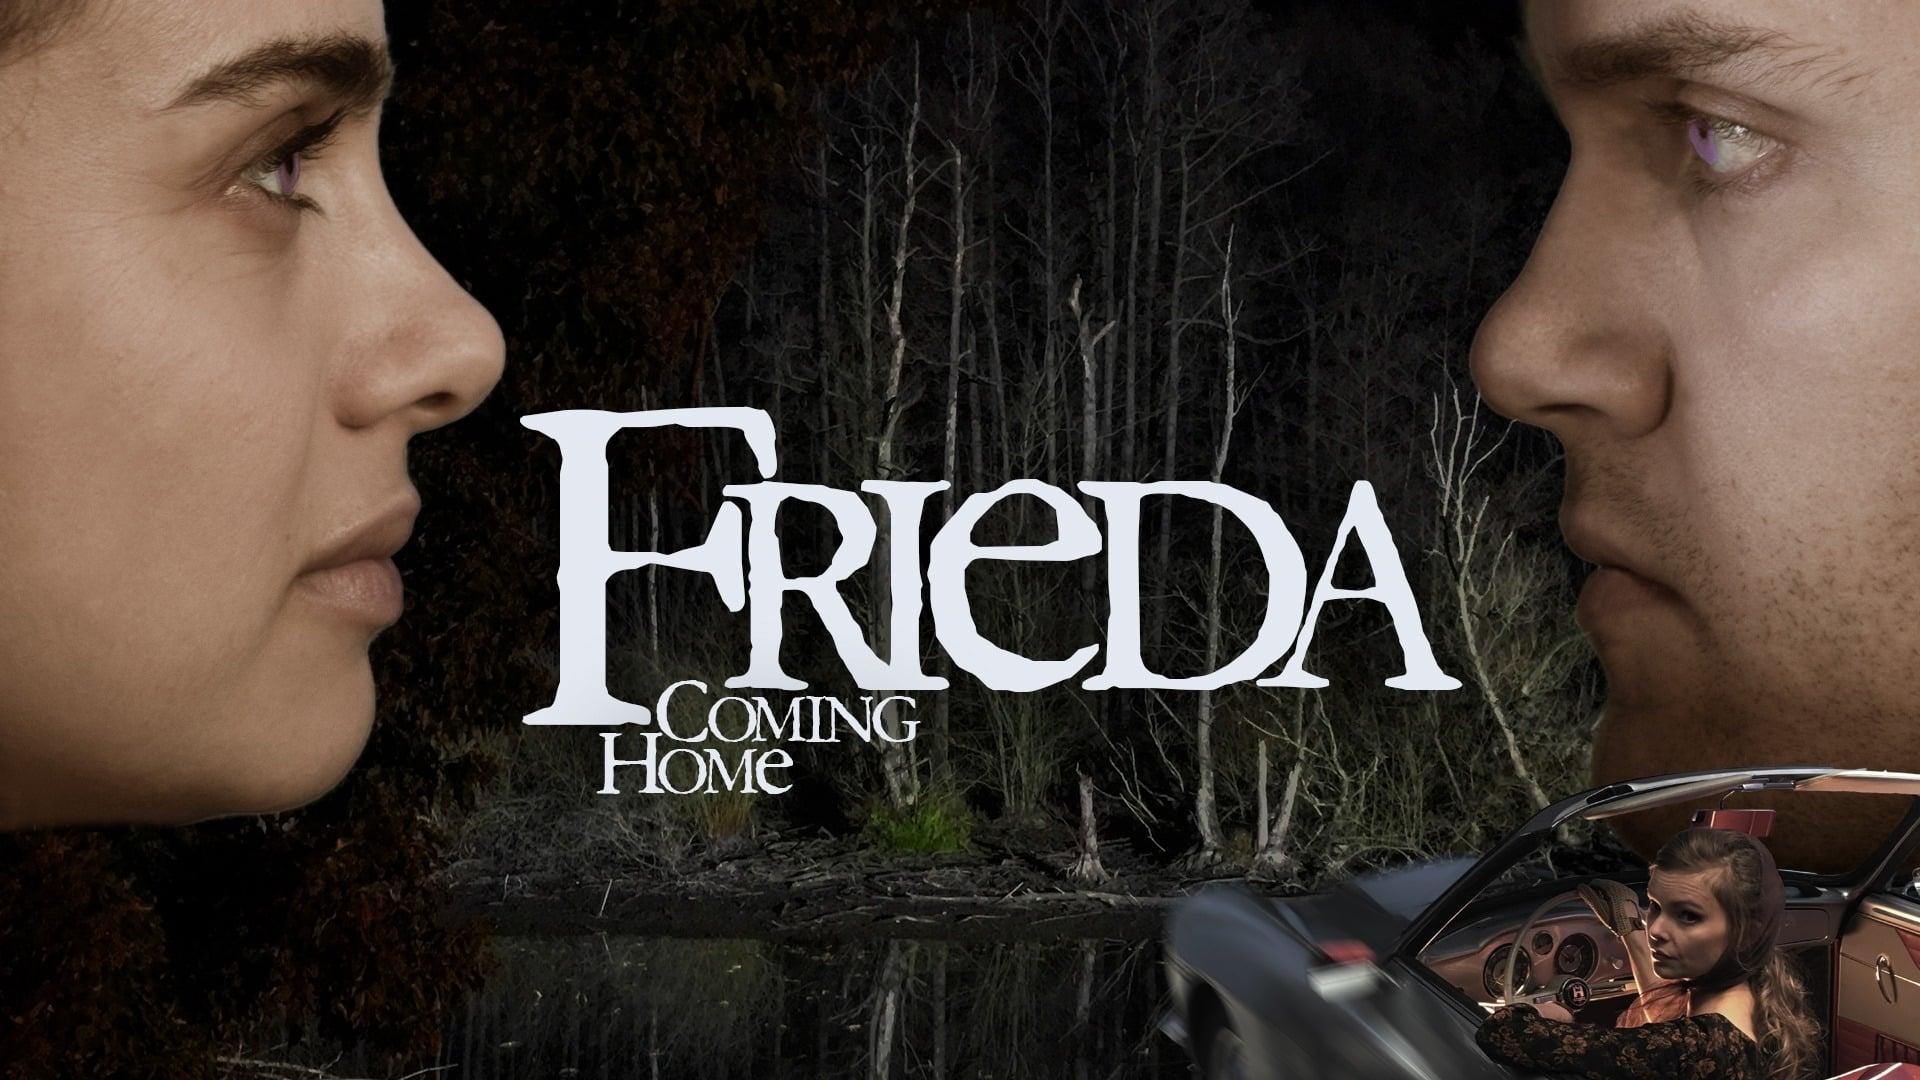 Frieda - Coming Home backdrop